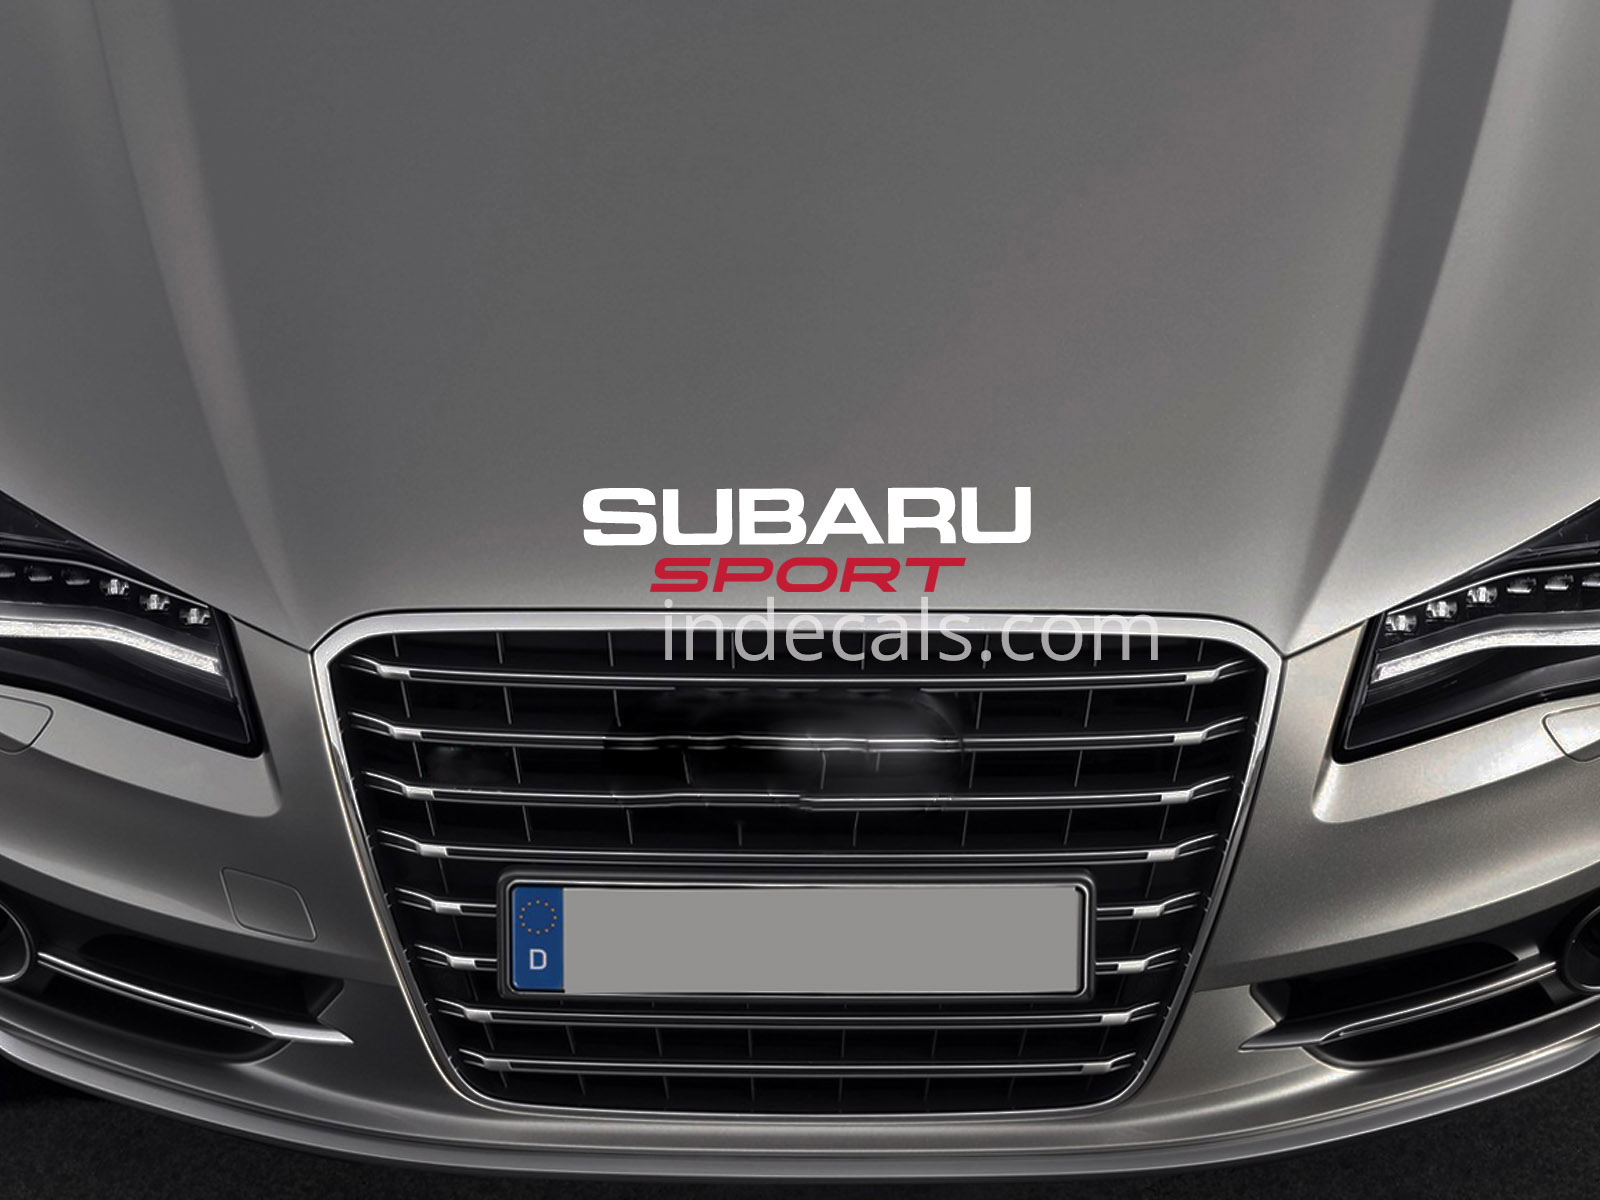 1 x Subaru Sport Sticker for Bonnet - White & Red